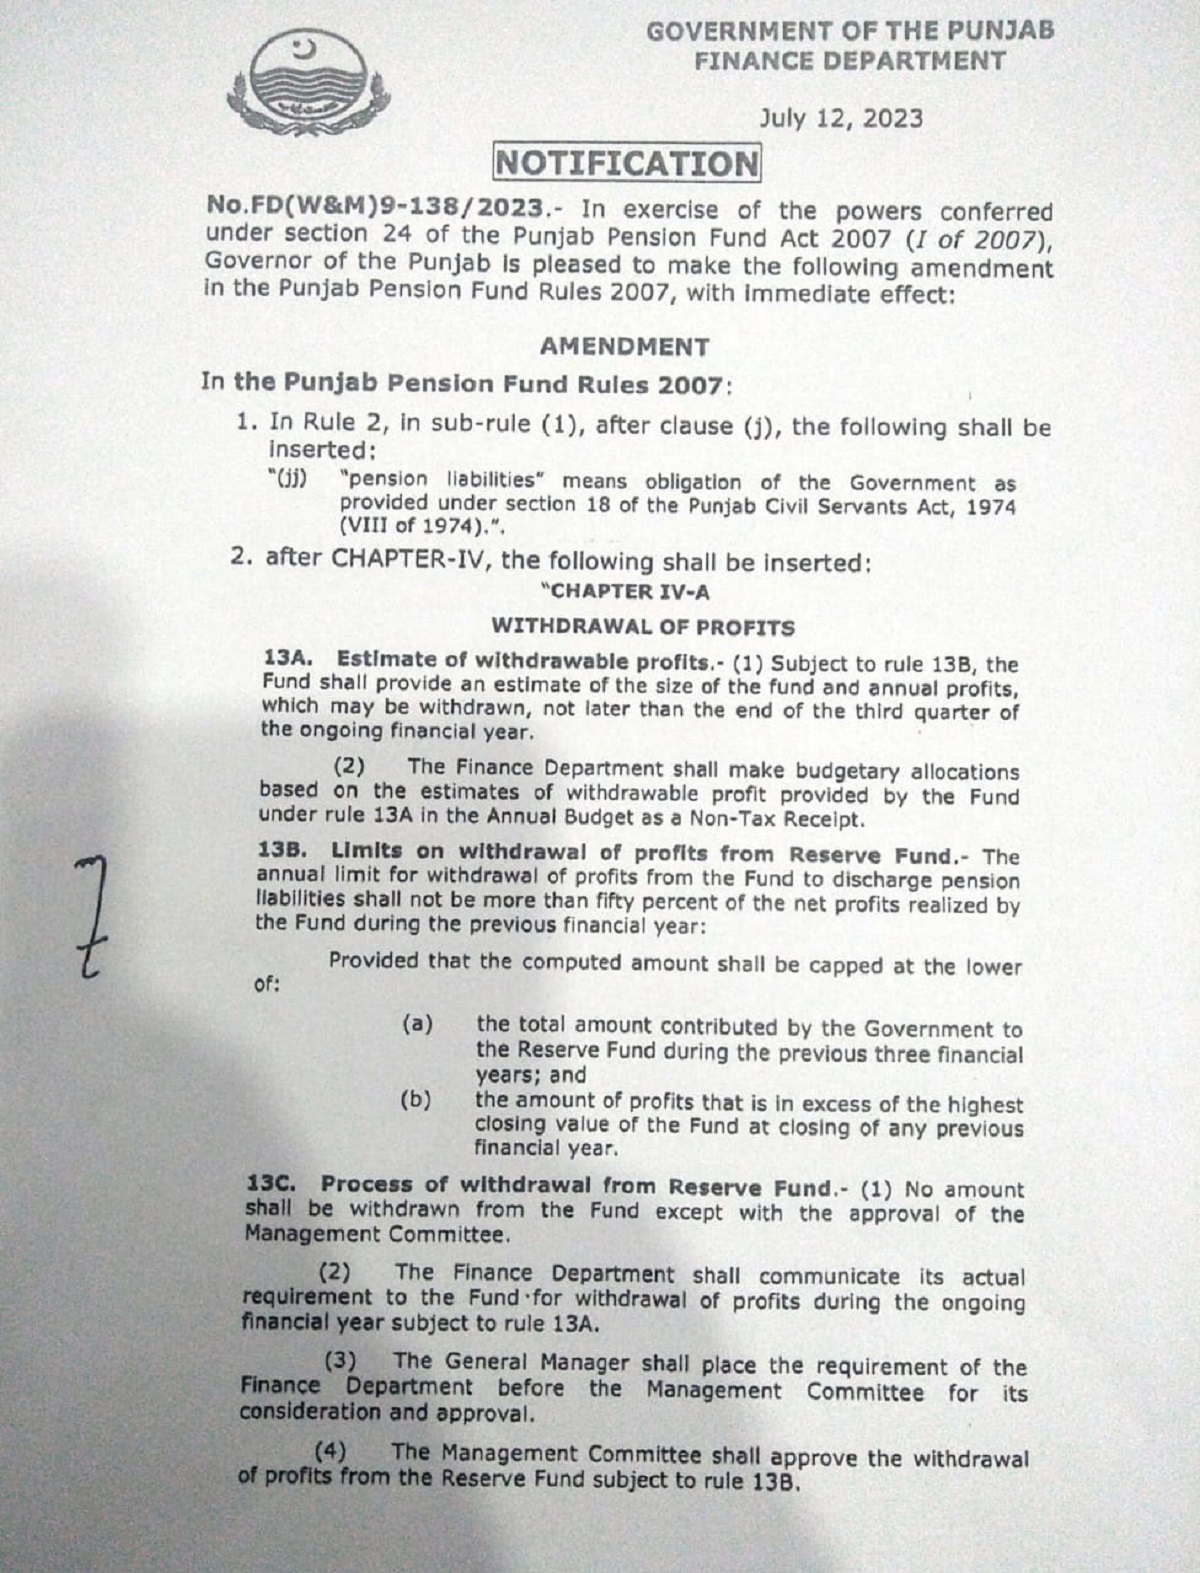 Amendment in Punjab Pension Fund Rules 2007